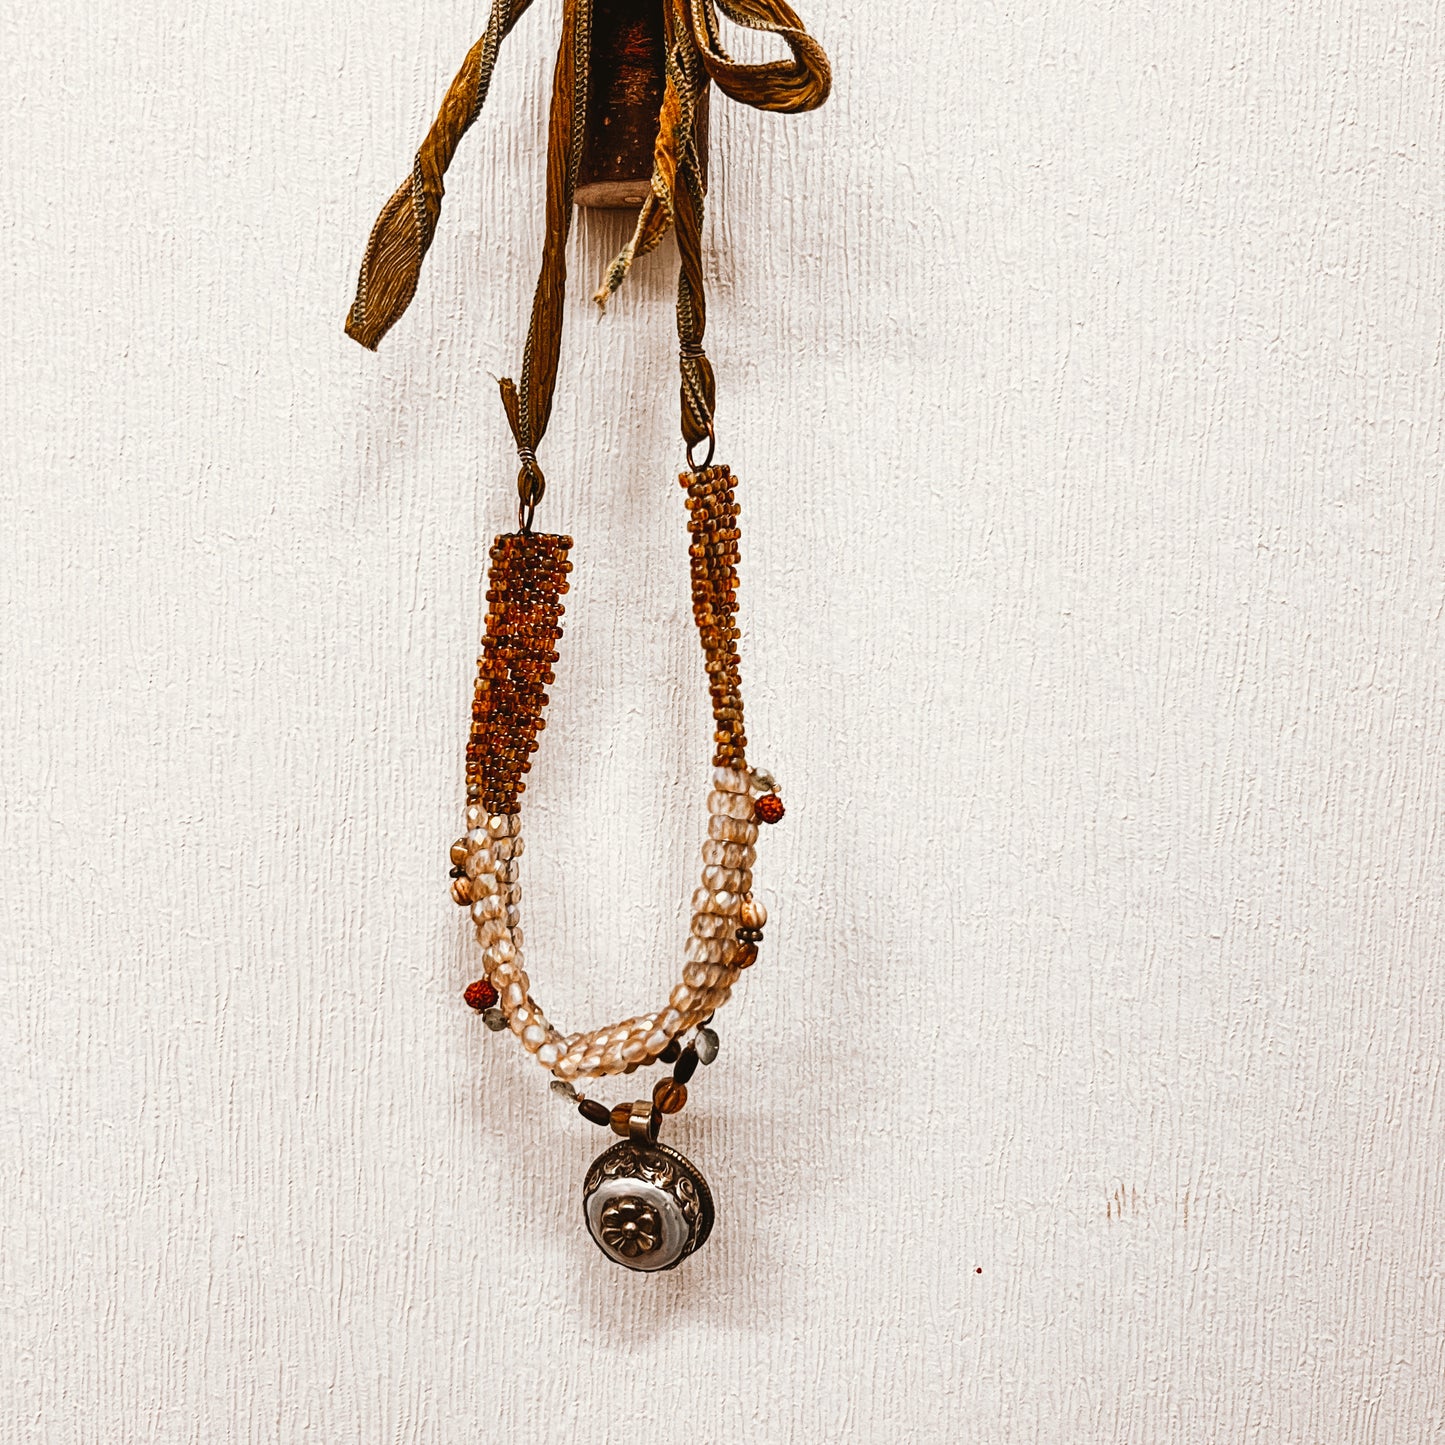 ITEM 124: CORAL BURNAMAN “Pixie and Corelli” necklace